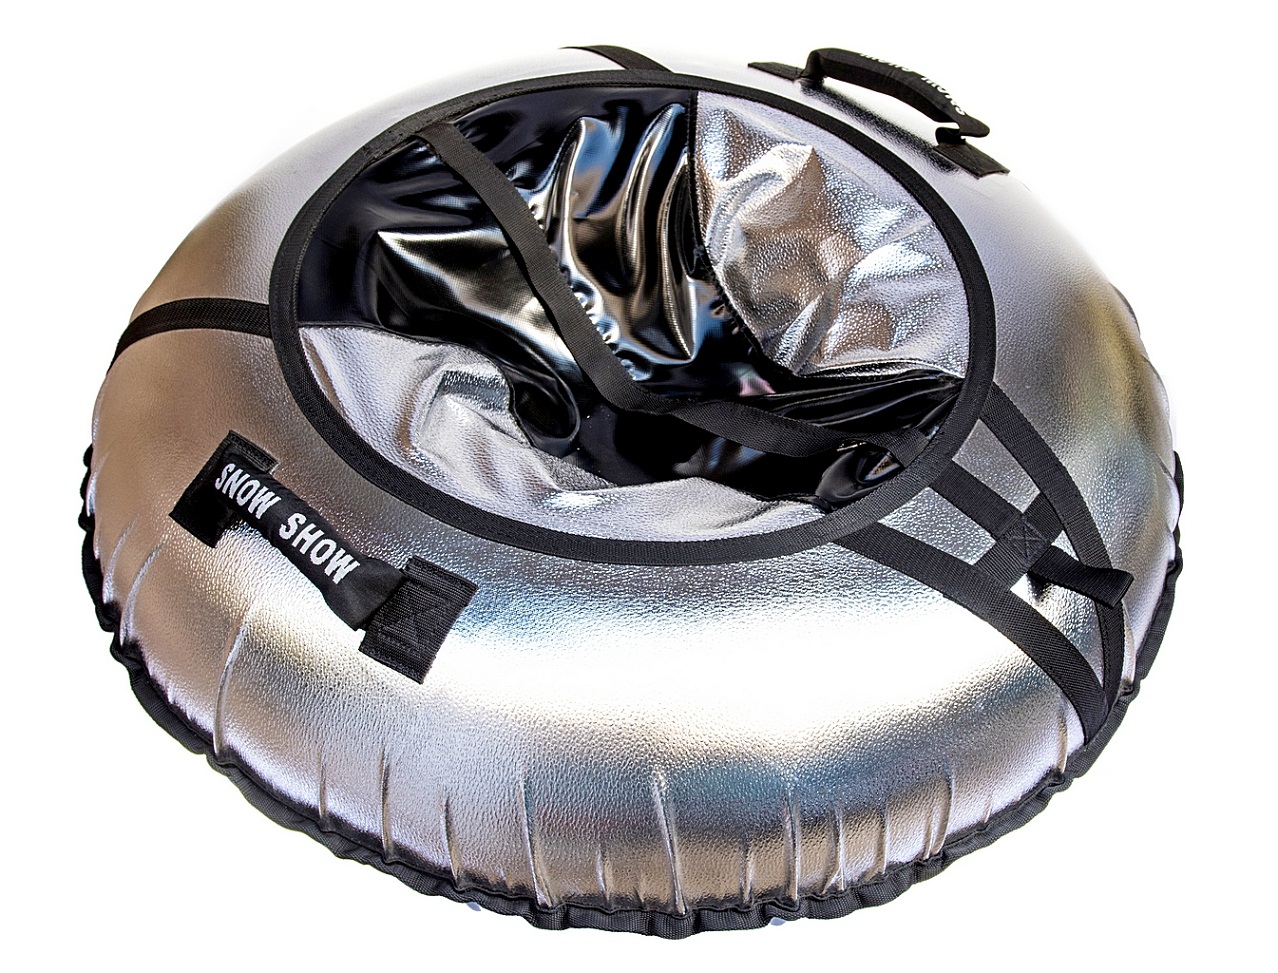 Санки надувные Тюбинг RT - Neo черно-серый металлик, диаметр 105 см   